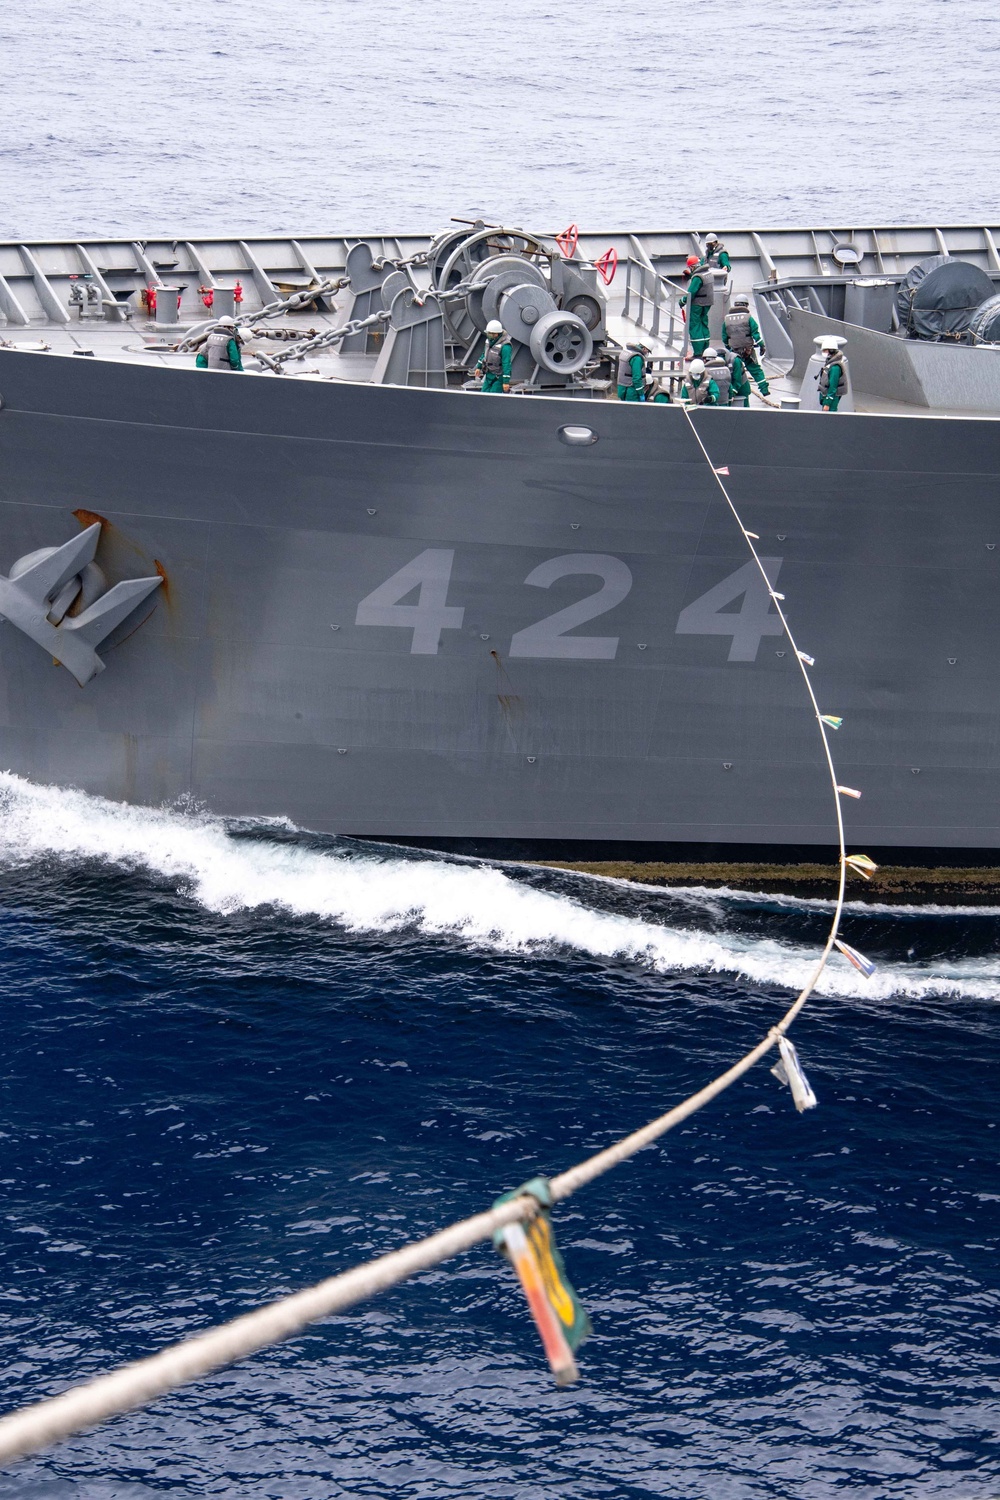 USS America conducts RAS with JS Hamana